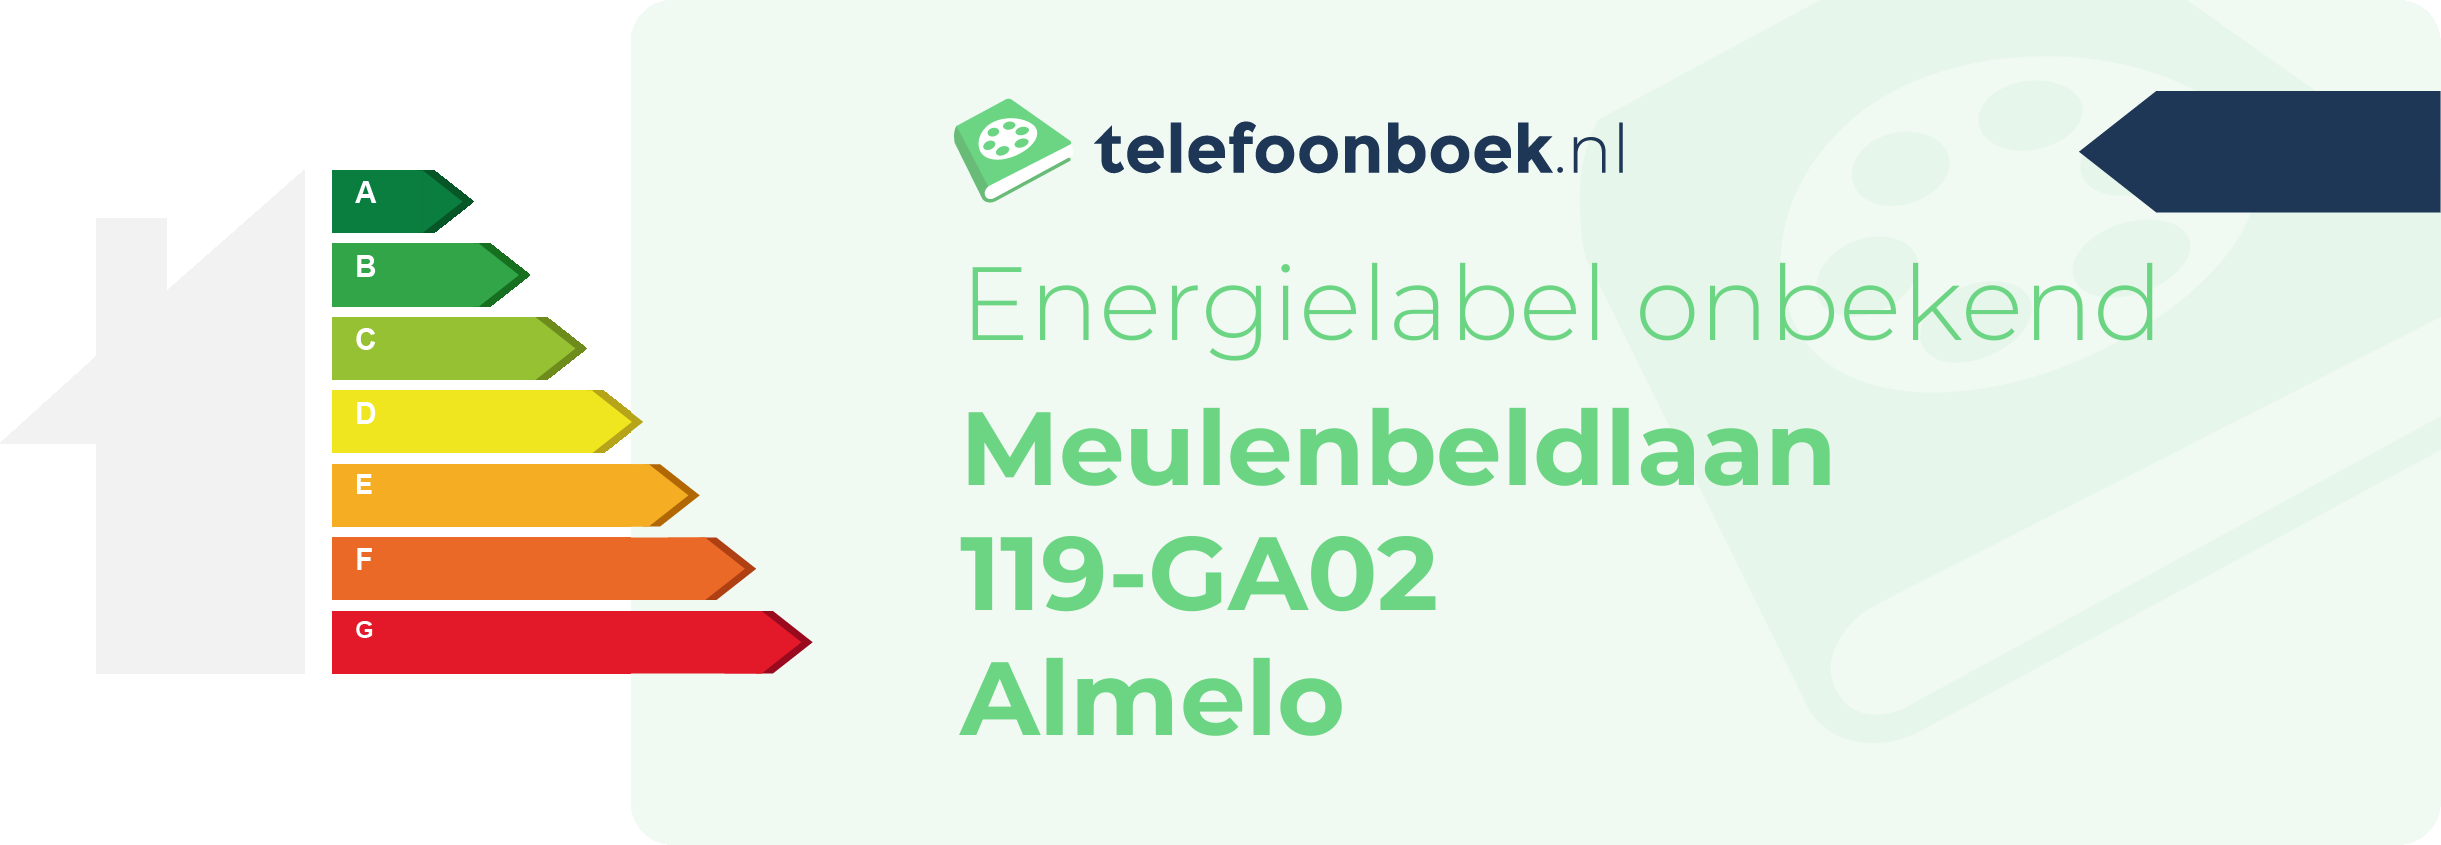 Energielabel Meulenbeldlaan 119-GA02 Almelo